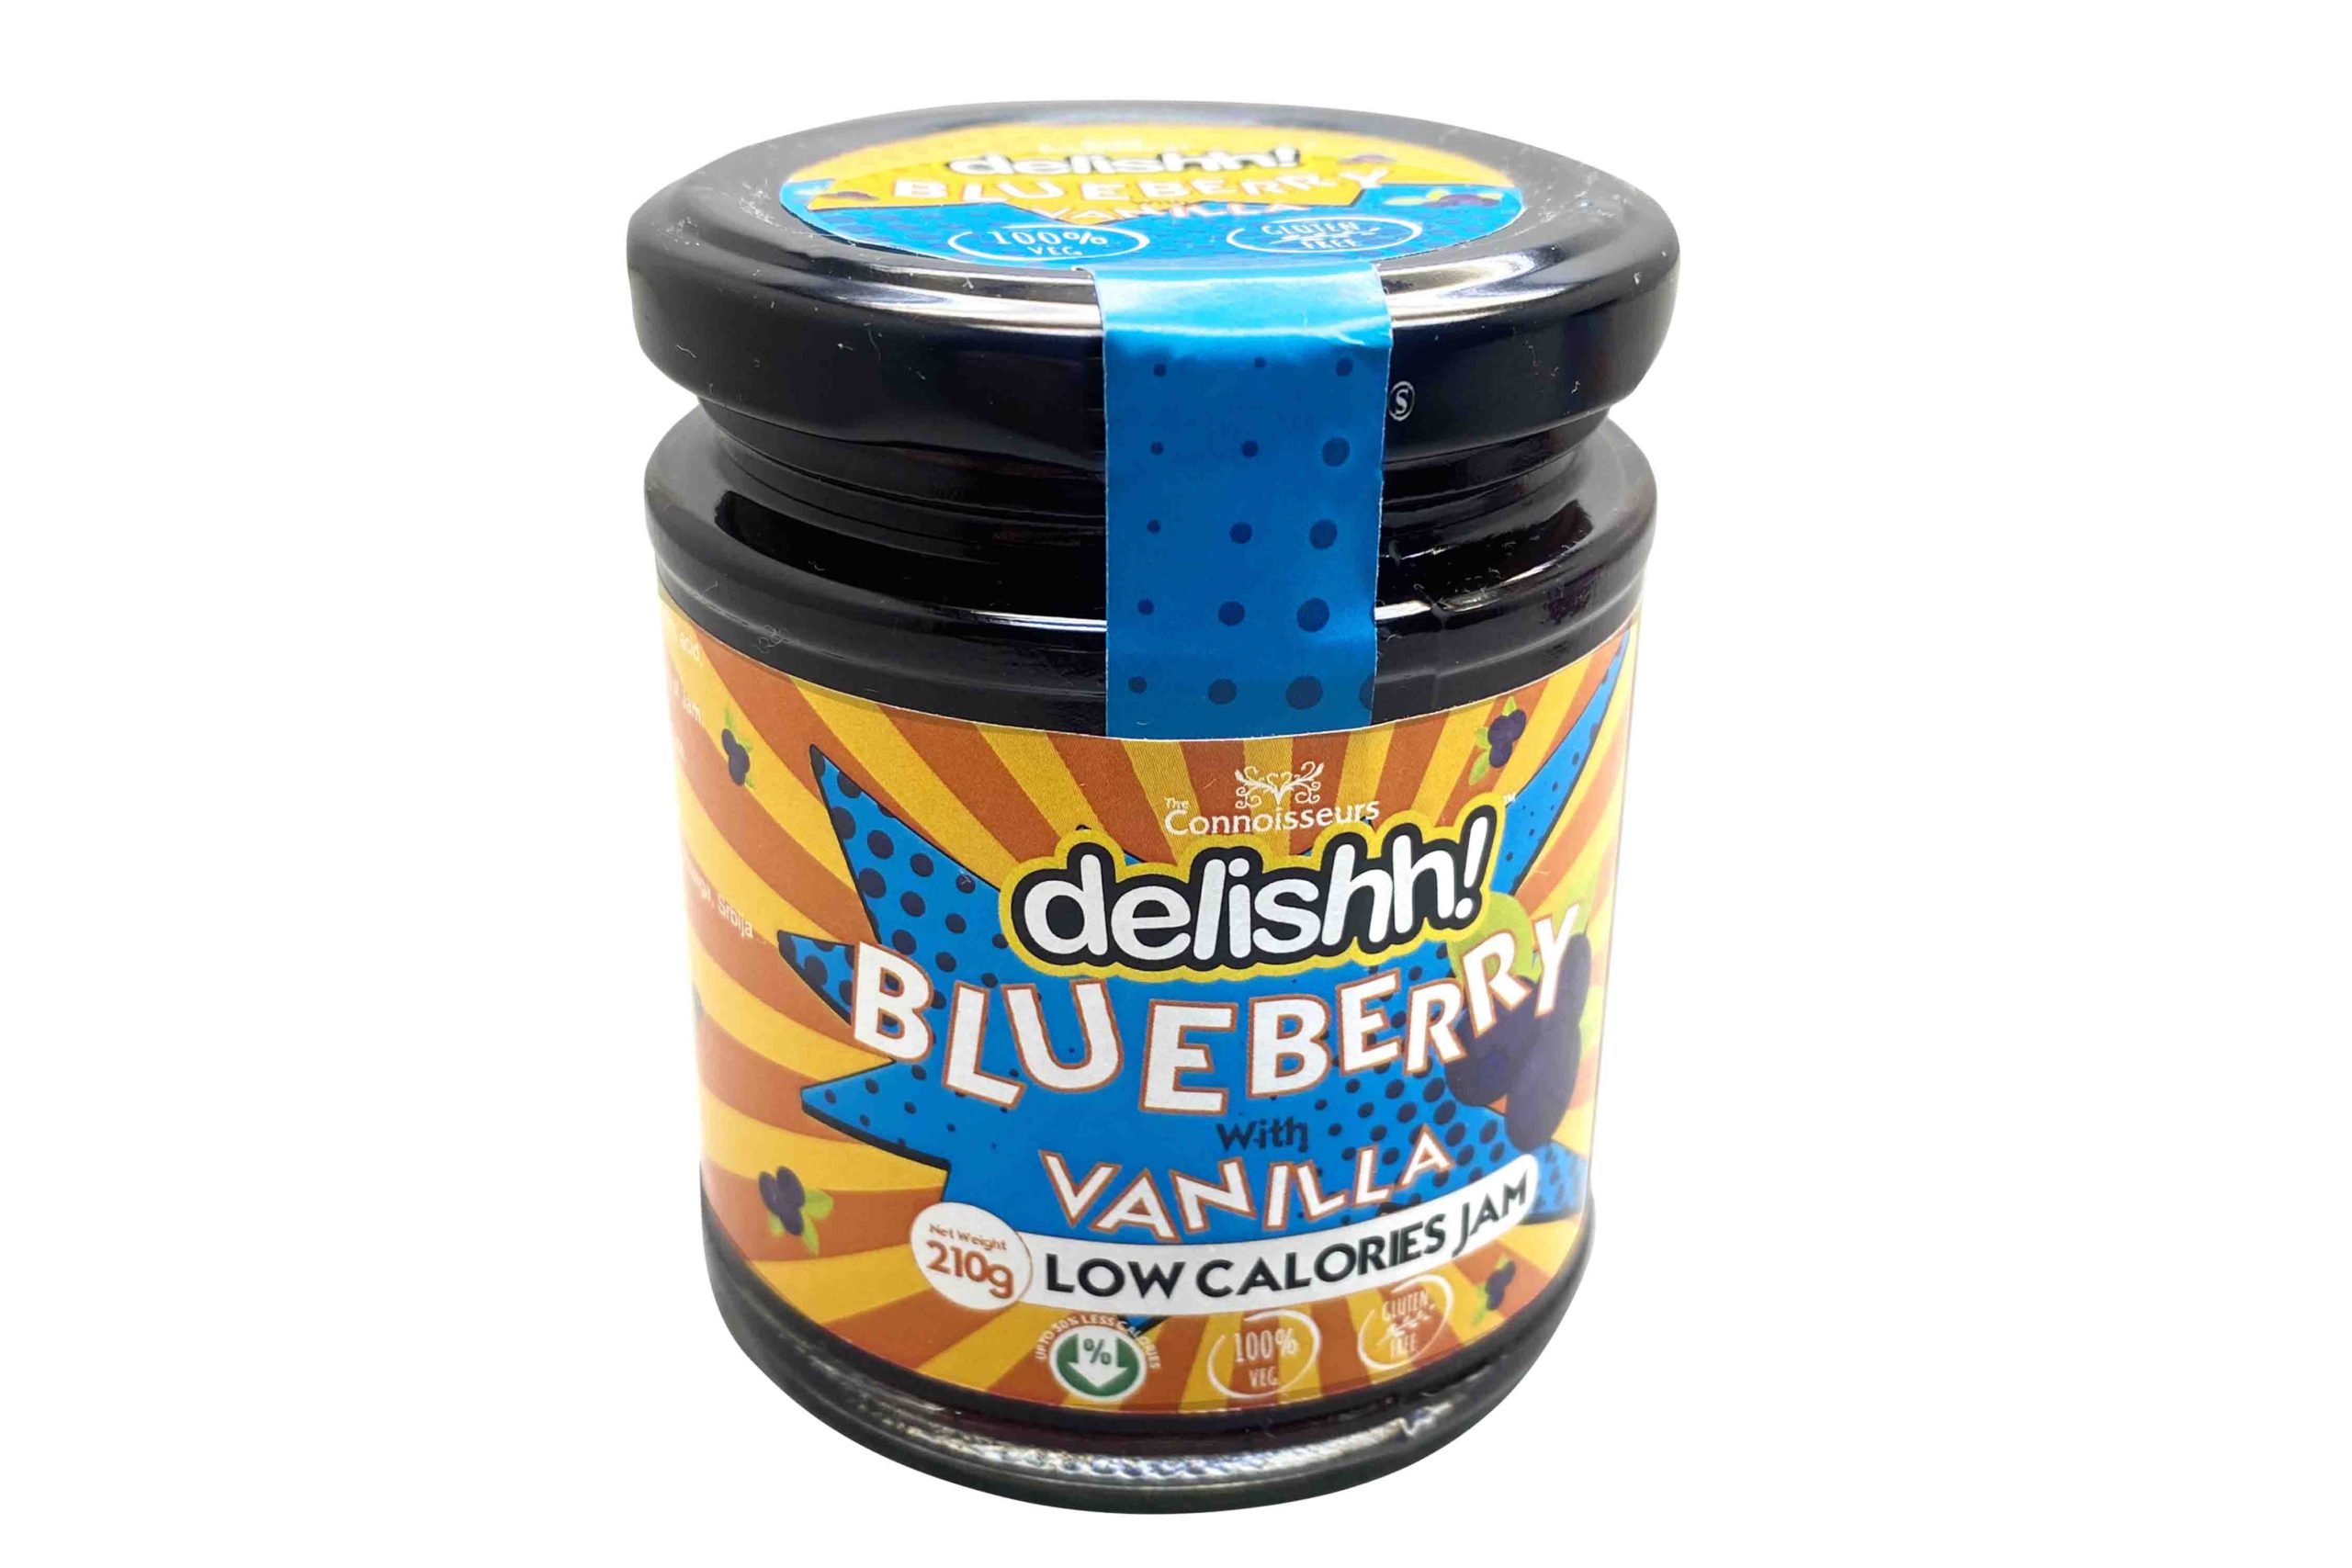 Delishh Blueberry Jam